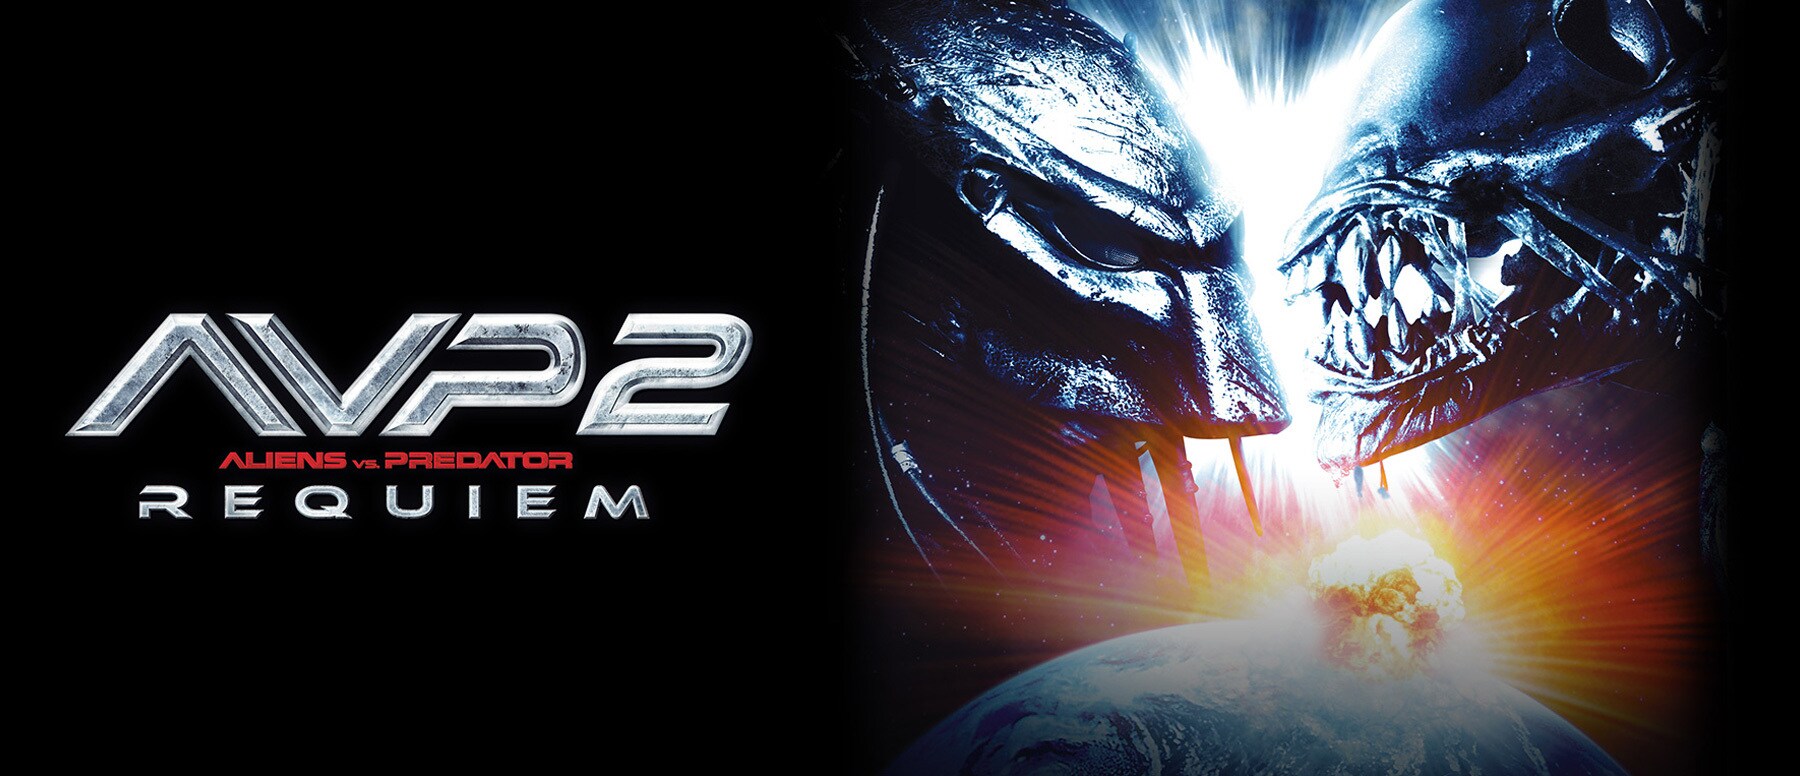 alien vs predator 2 full movie online english sub